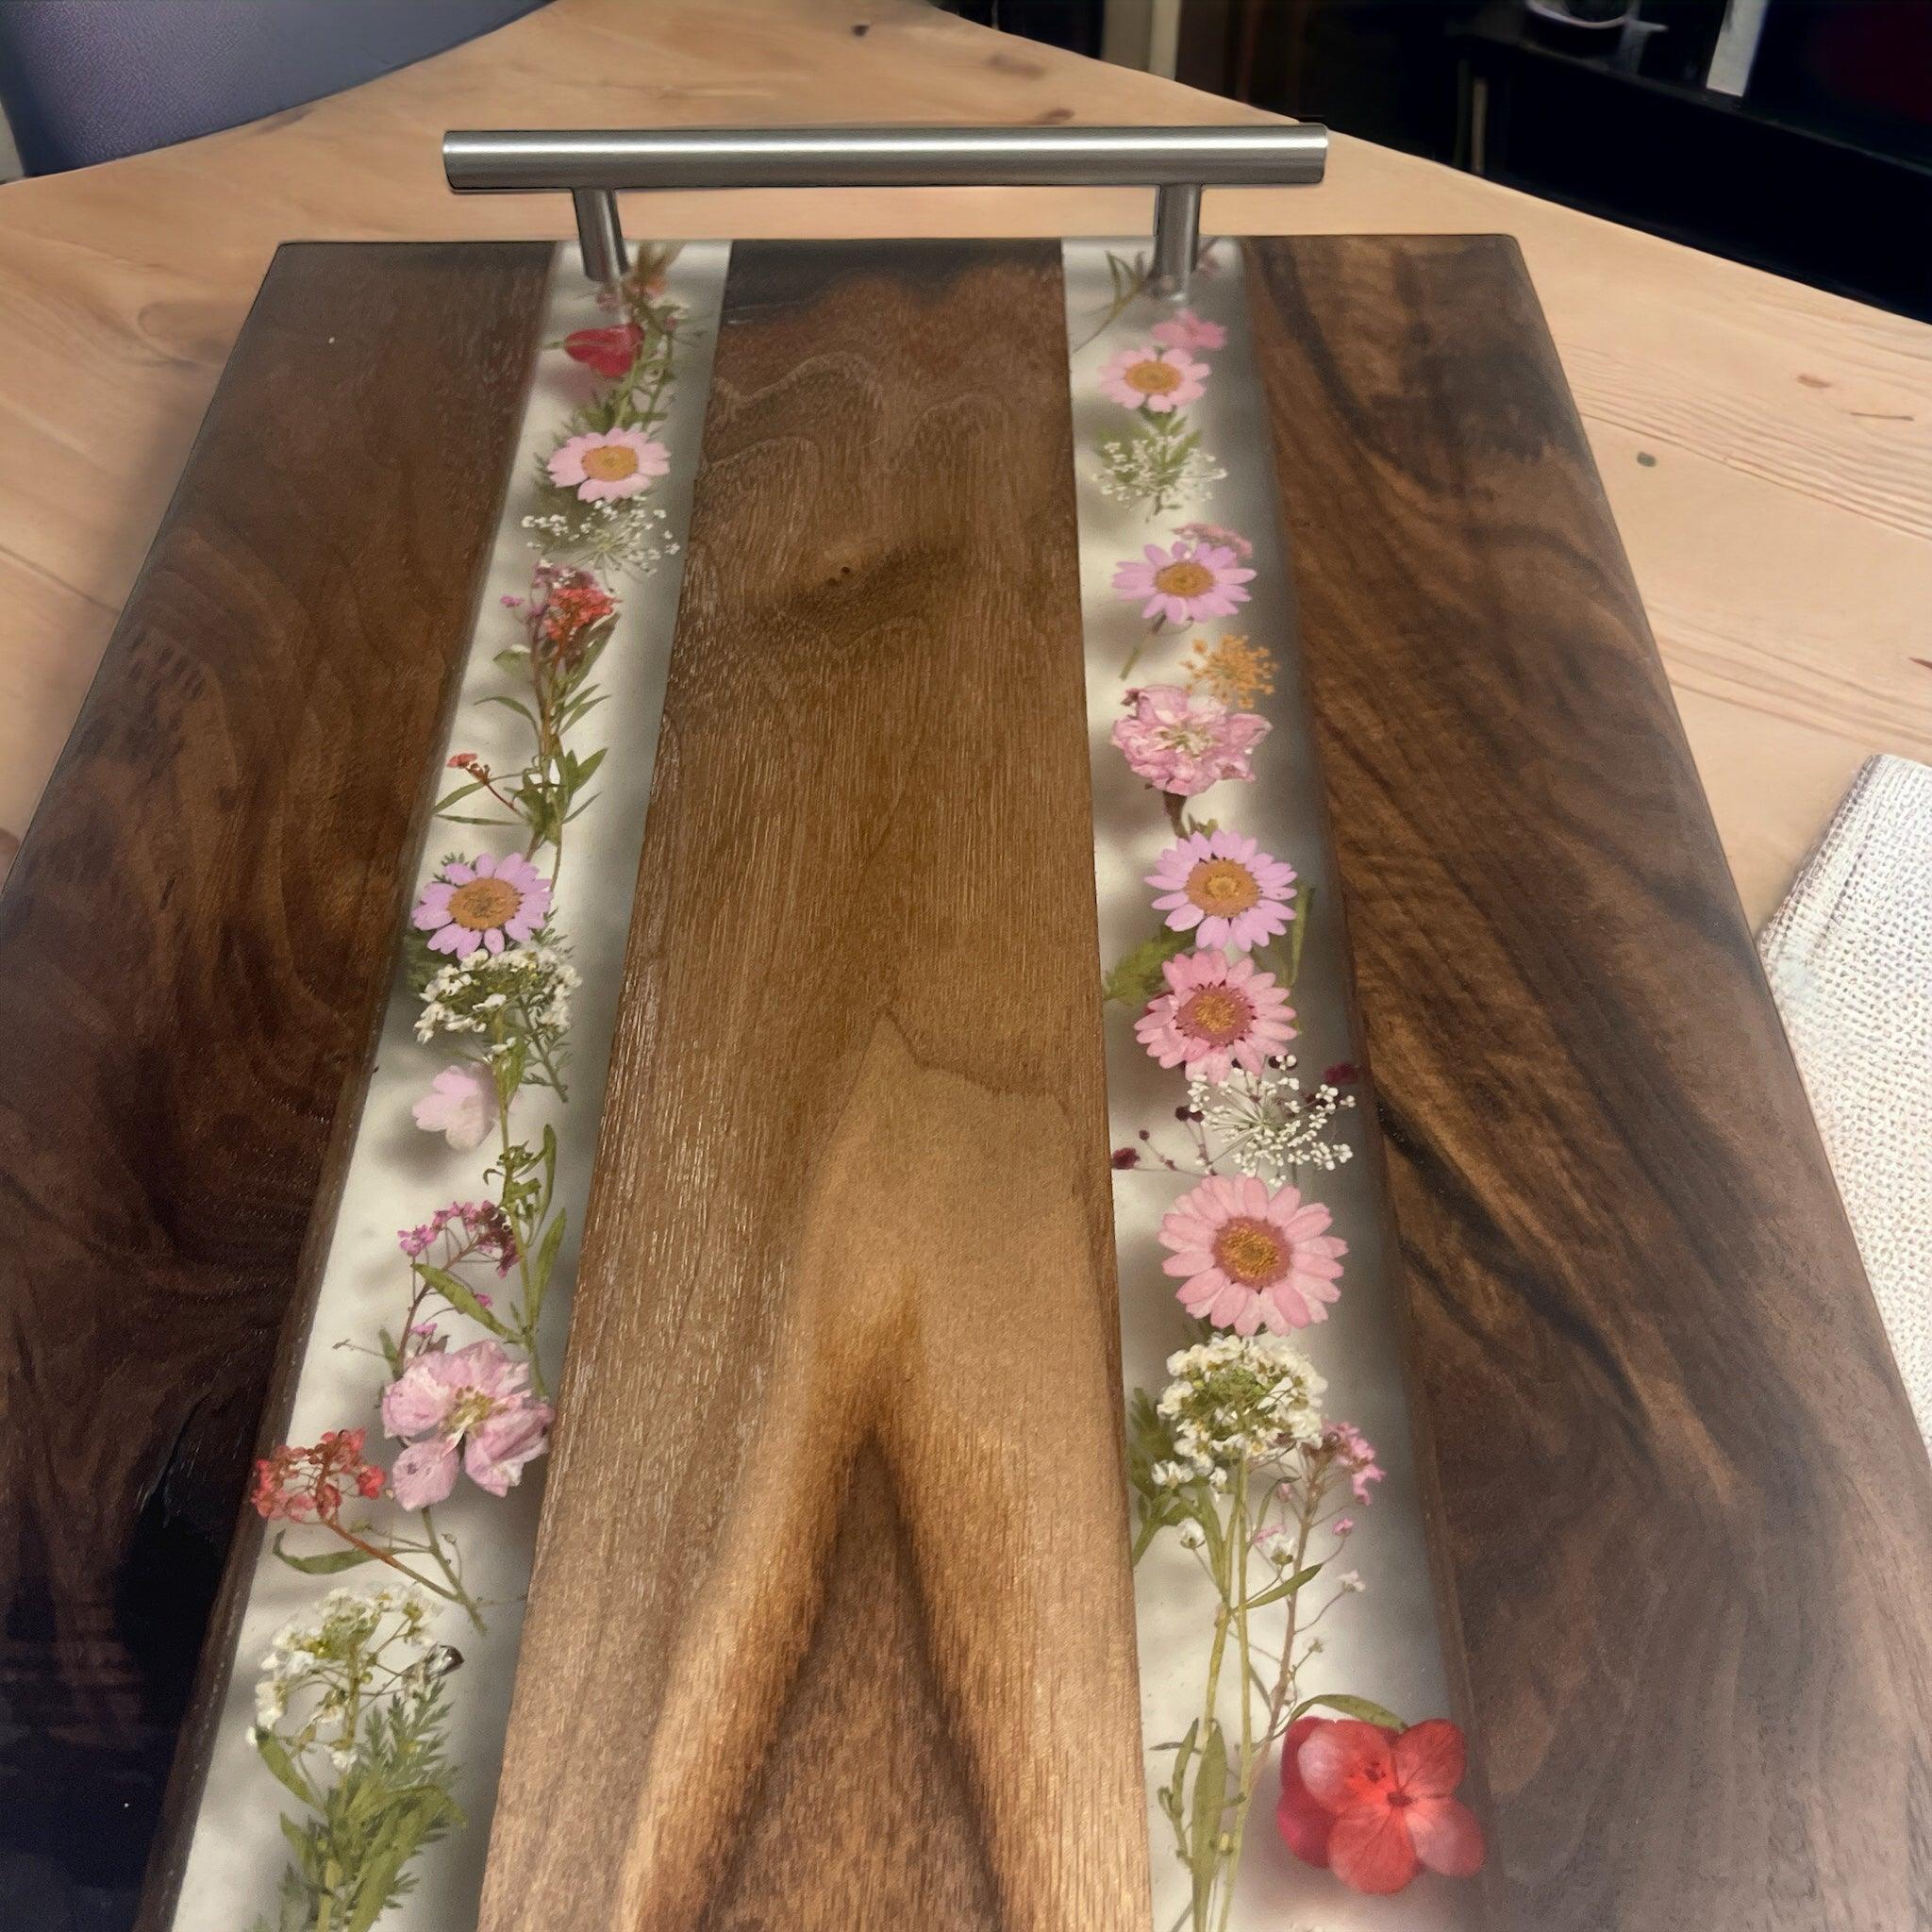 XL Black walnut Flower Board - We have the wood